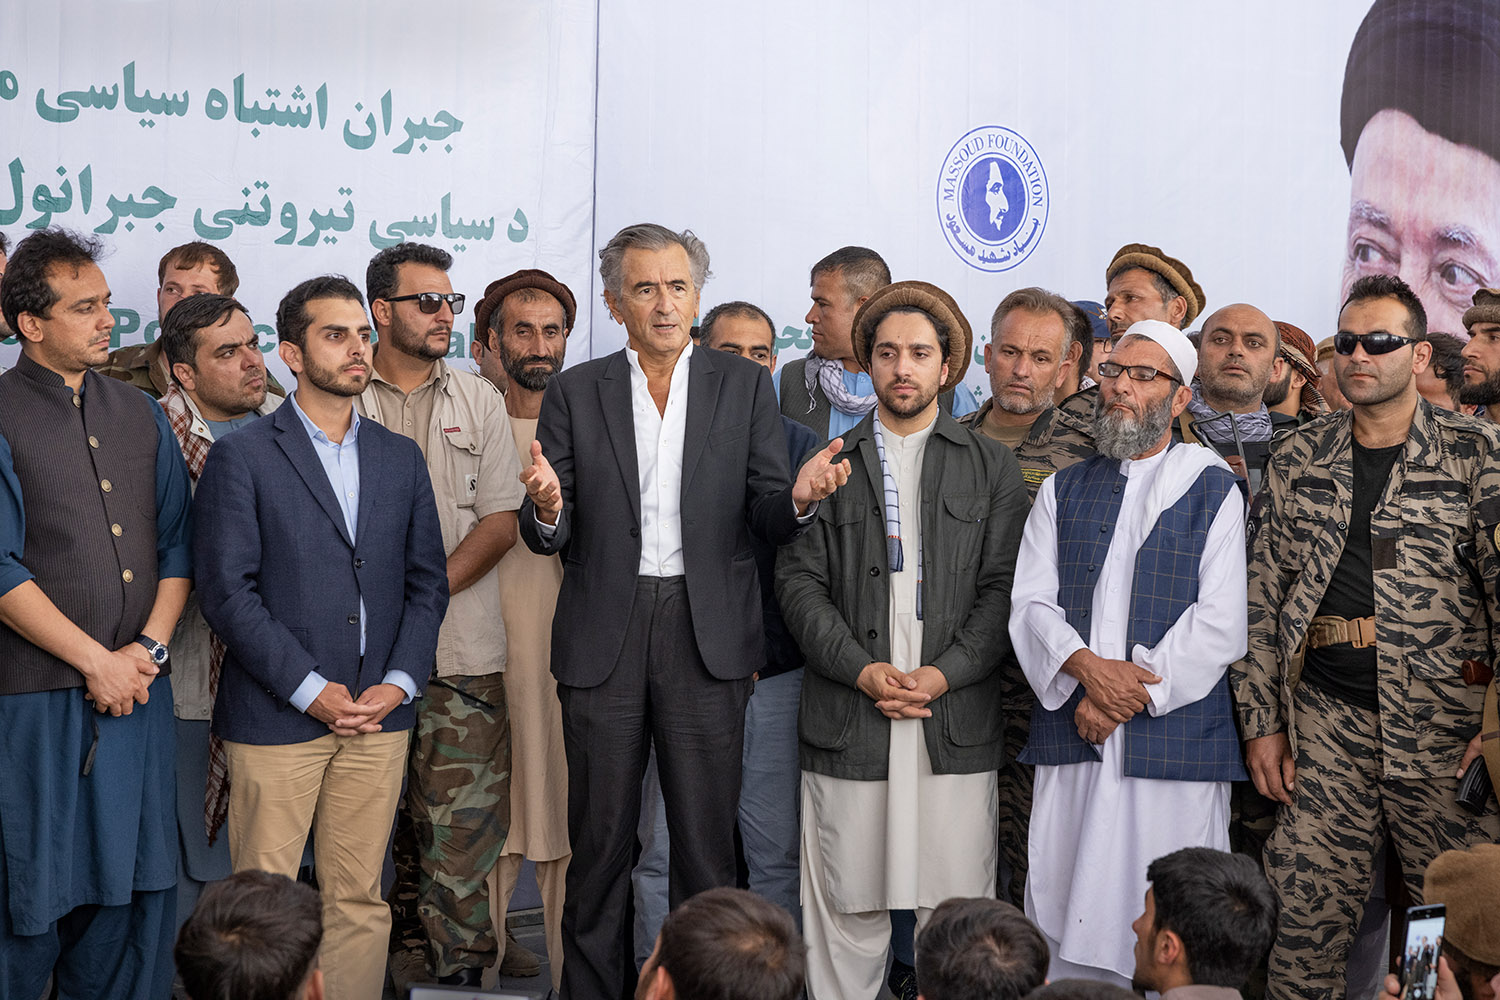 Bernard-Henri Lévy and Ahmad Massoud address the Mujahideen and Panjshir residents during the ceremony the memory of the Lion of Panjshir